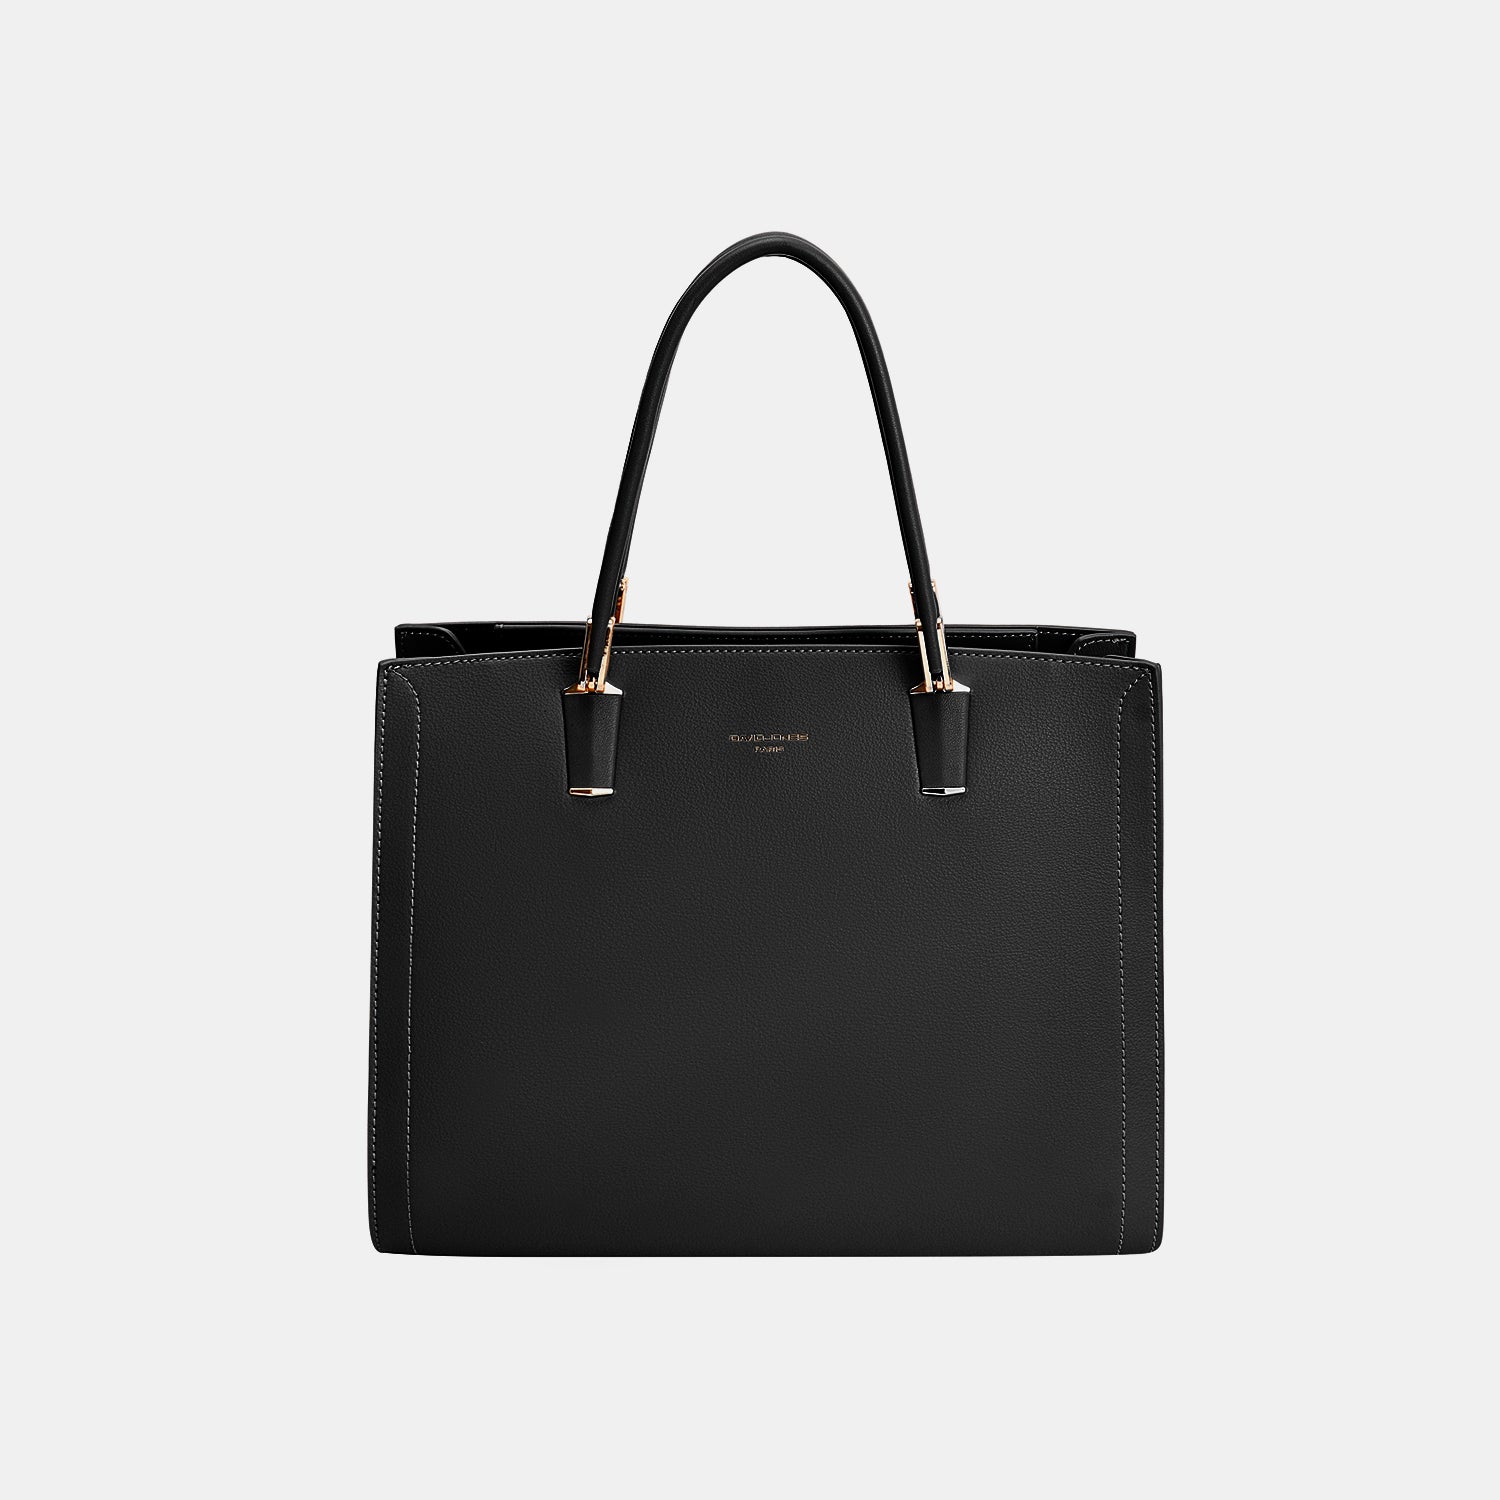 David Jones PU Leather Medium Handbag Black One Size 